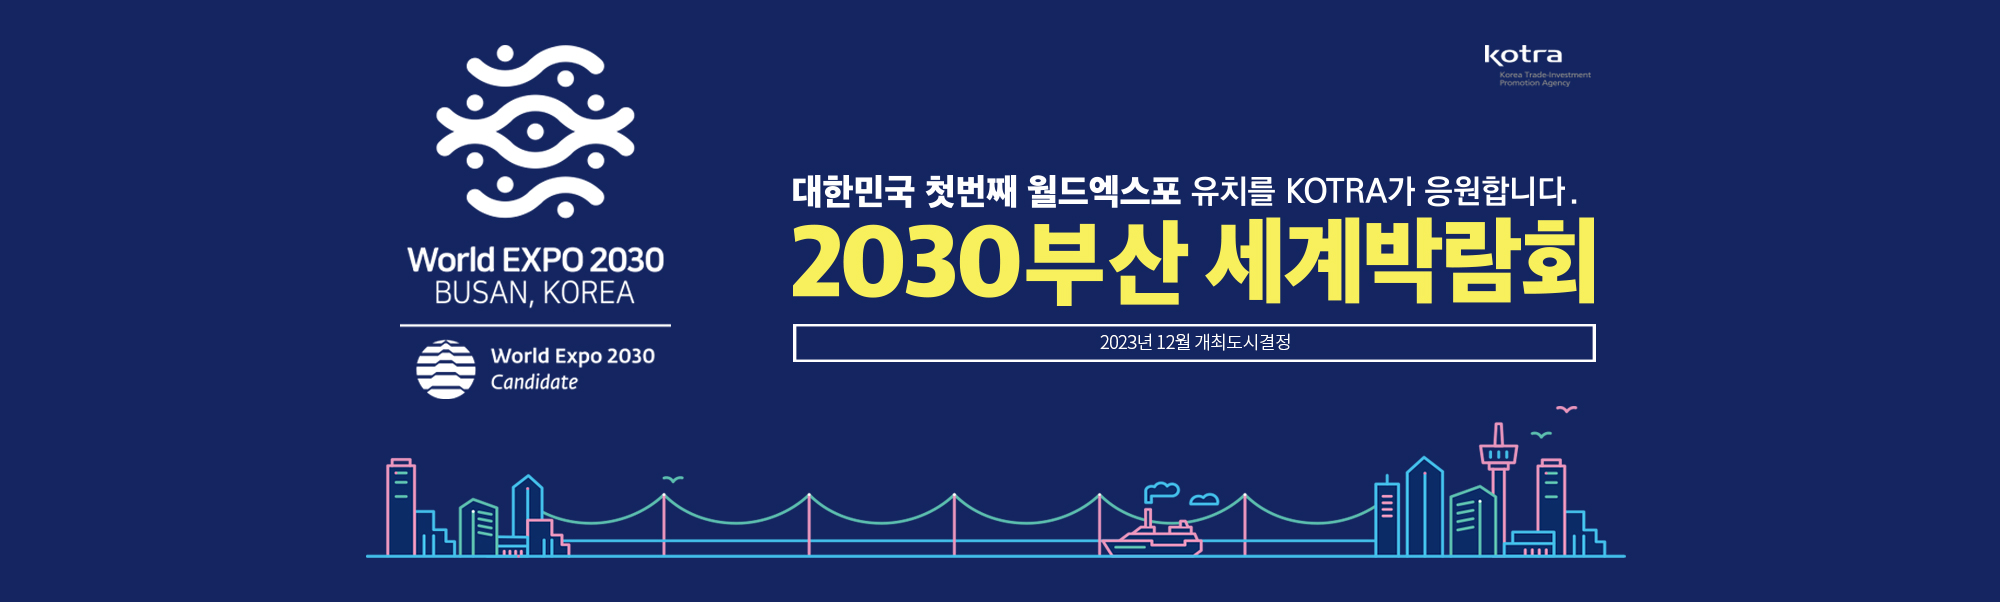 World EXPO 2030
BUSAN, KOREA
World Expo 2030
Candidate
대한민국 첫번째 월드엑스포 유치를 KOTRA가 응원합니다.
2030부산 세계박람회
2023년 12월 개최도시결정